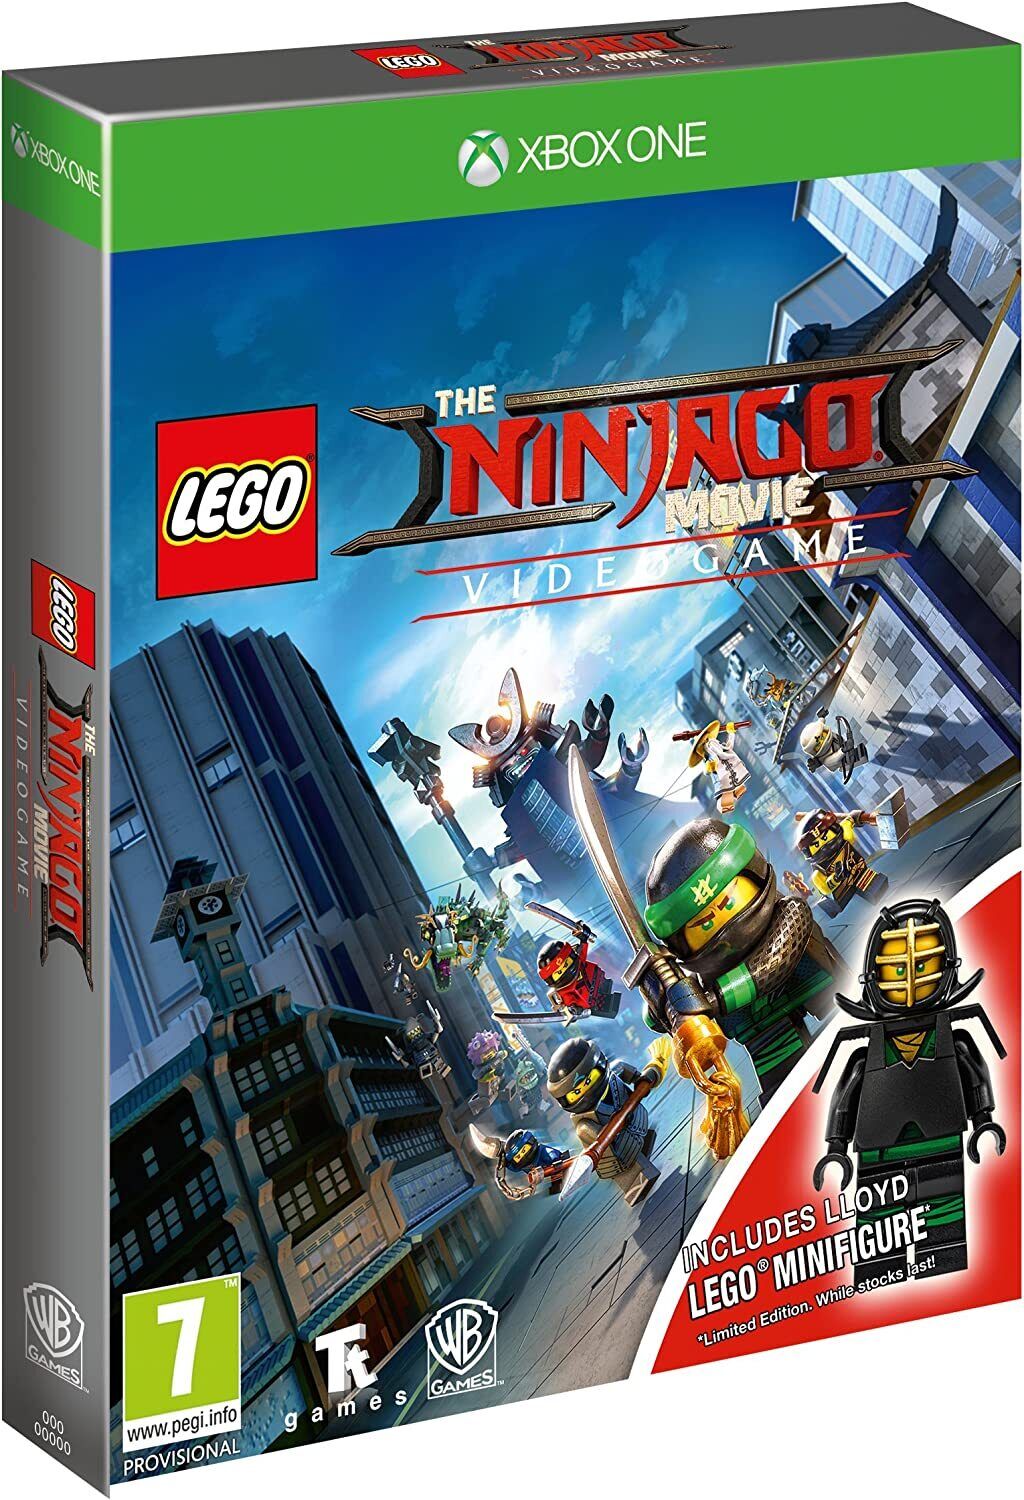 LEGO Ниндзяго: Фильм - Видеоигра. Special Edition (русские субтитры) (Xbox One / Series)